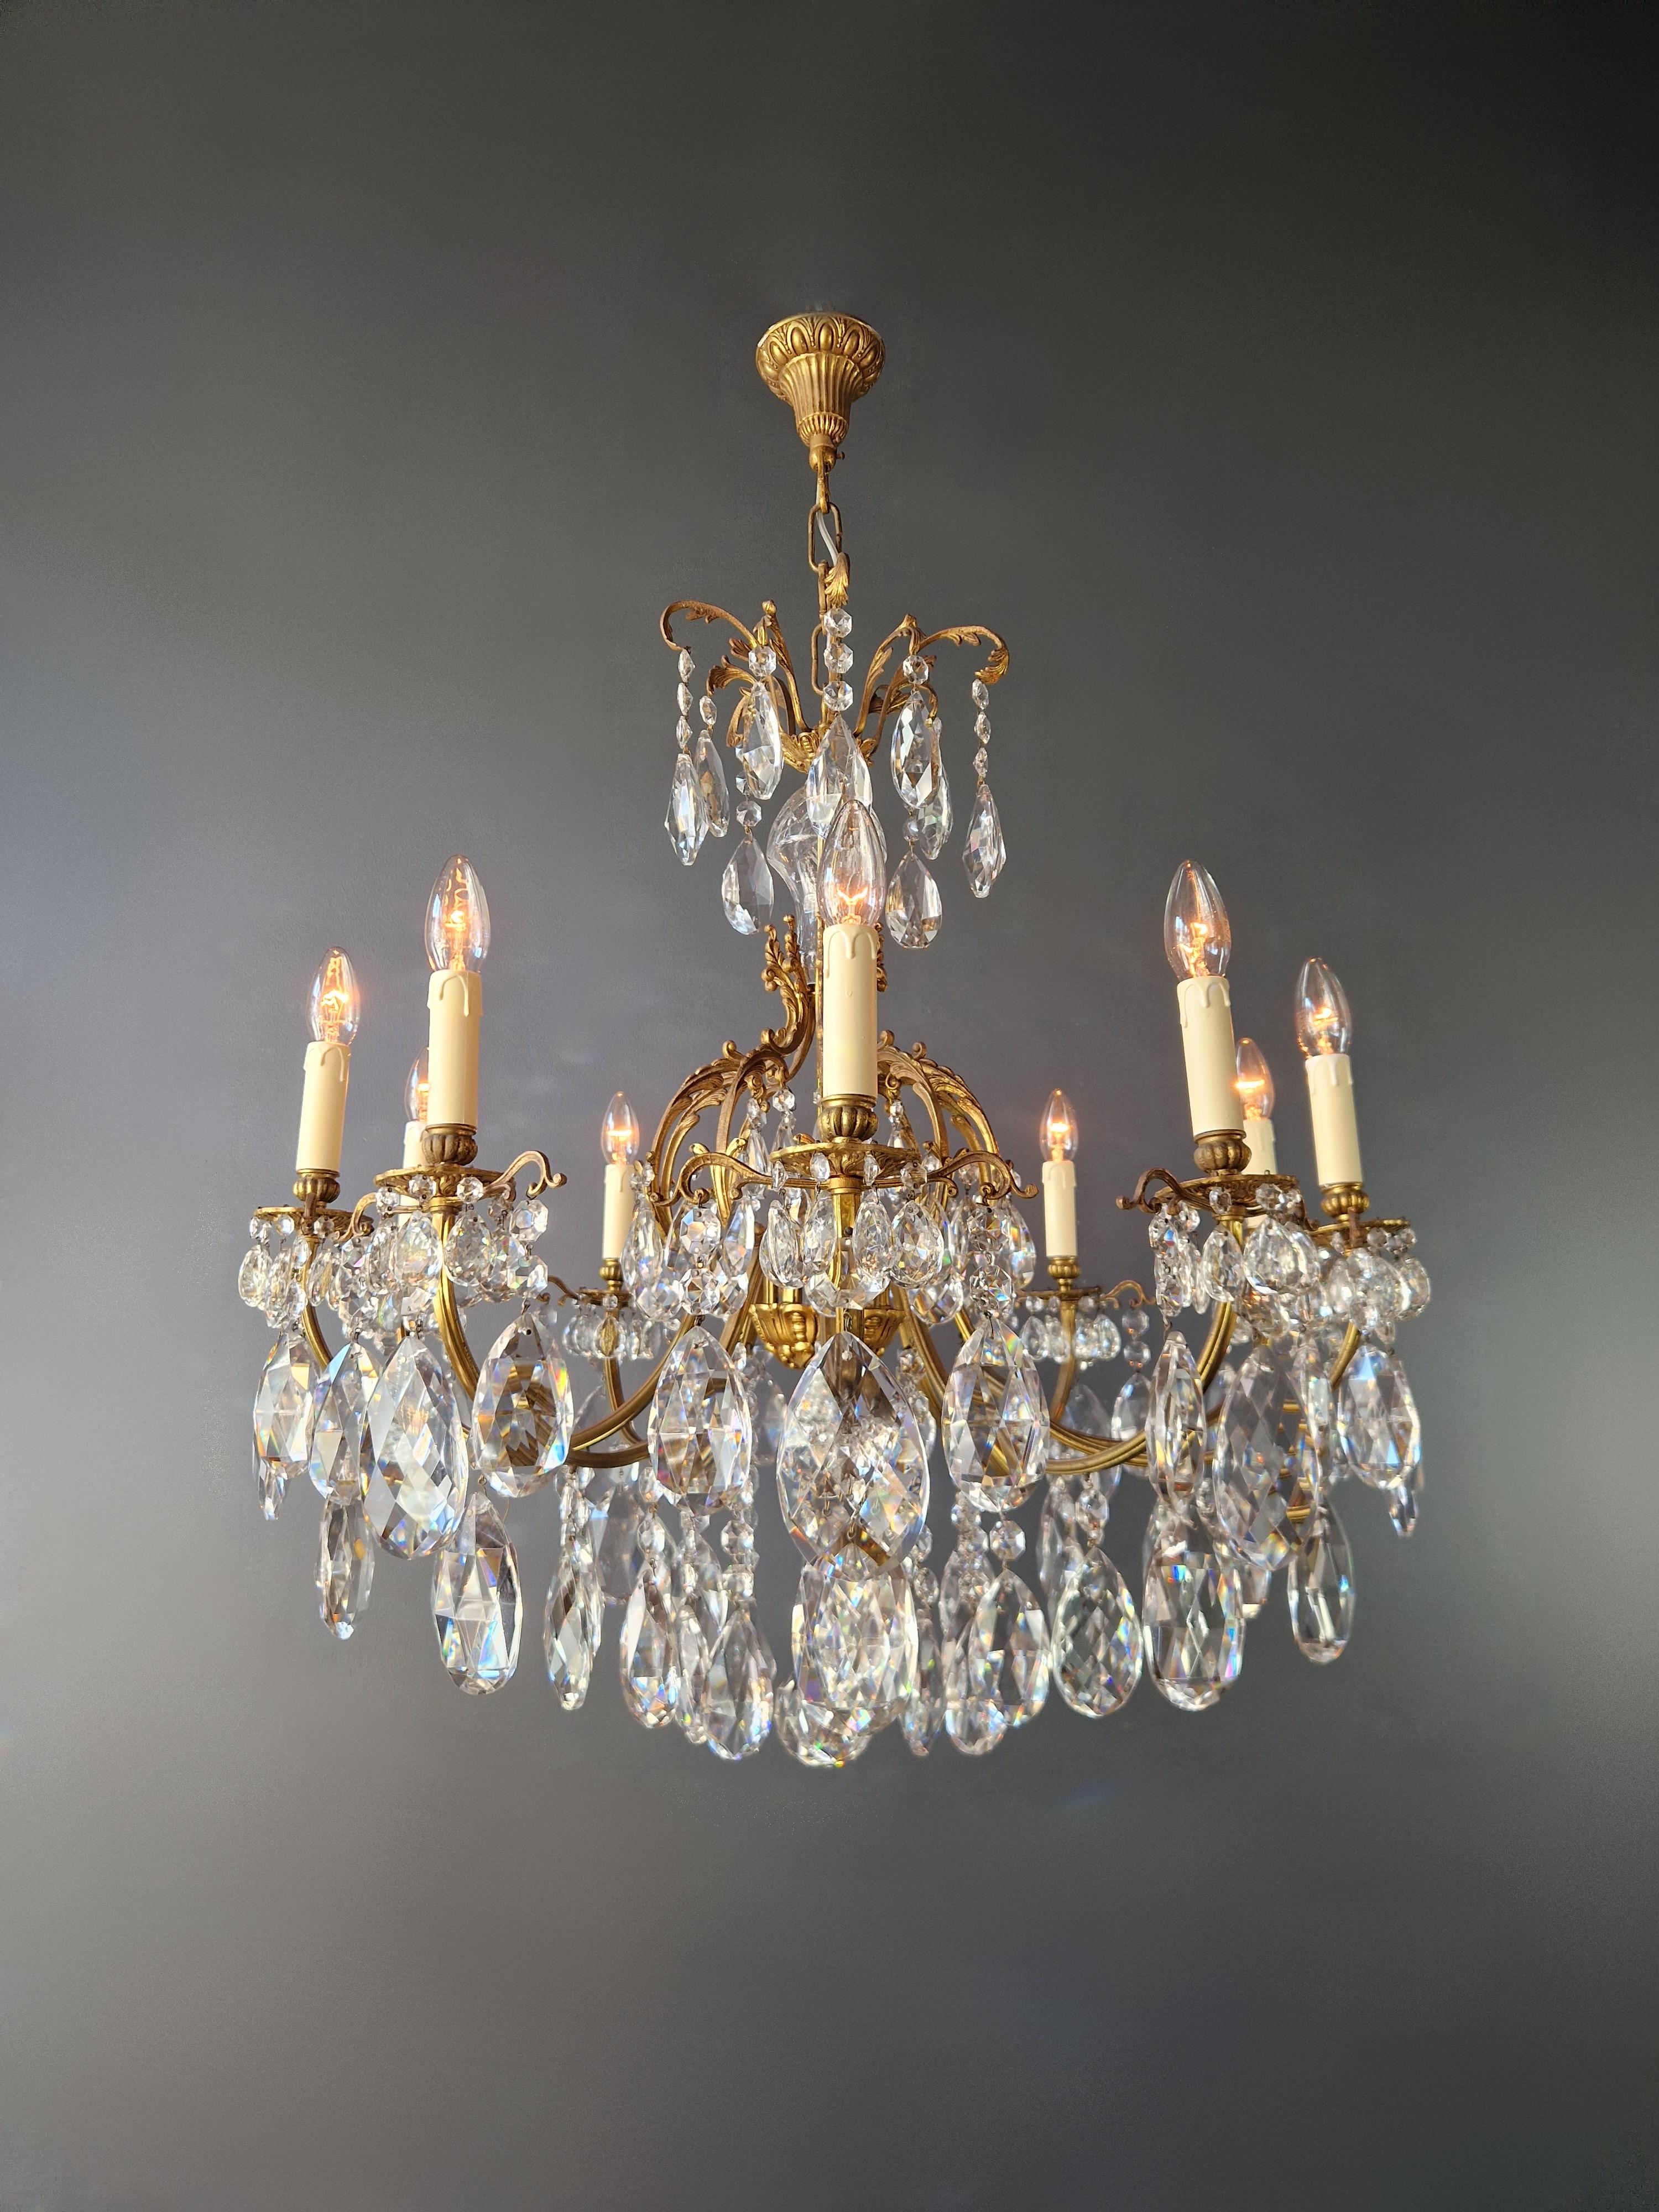 Italian Art Nouveau Style Brass Crystal Chandelier Gold Foliage  For Sale